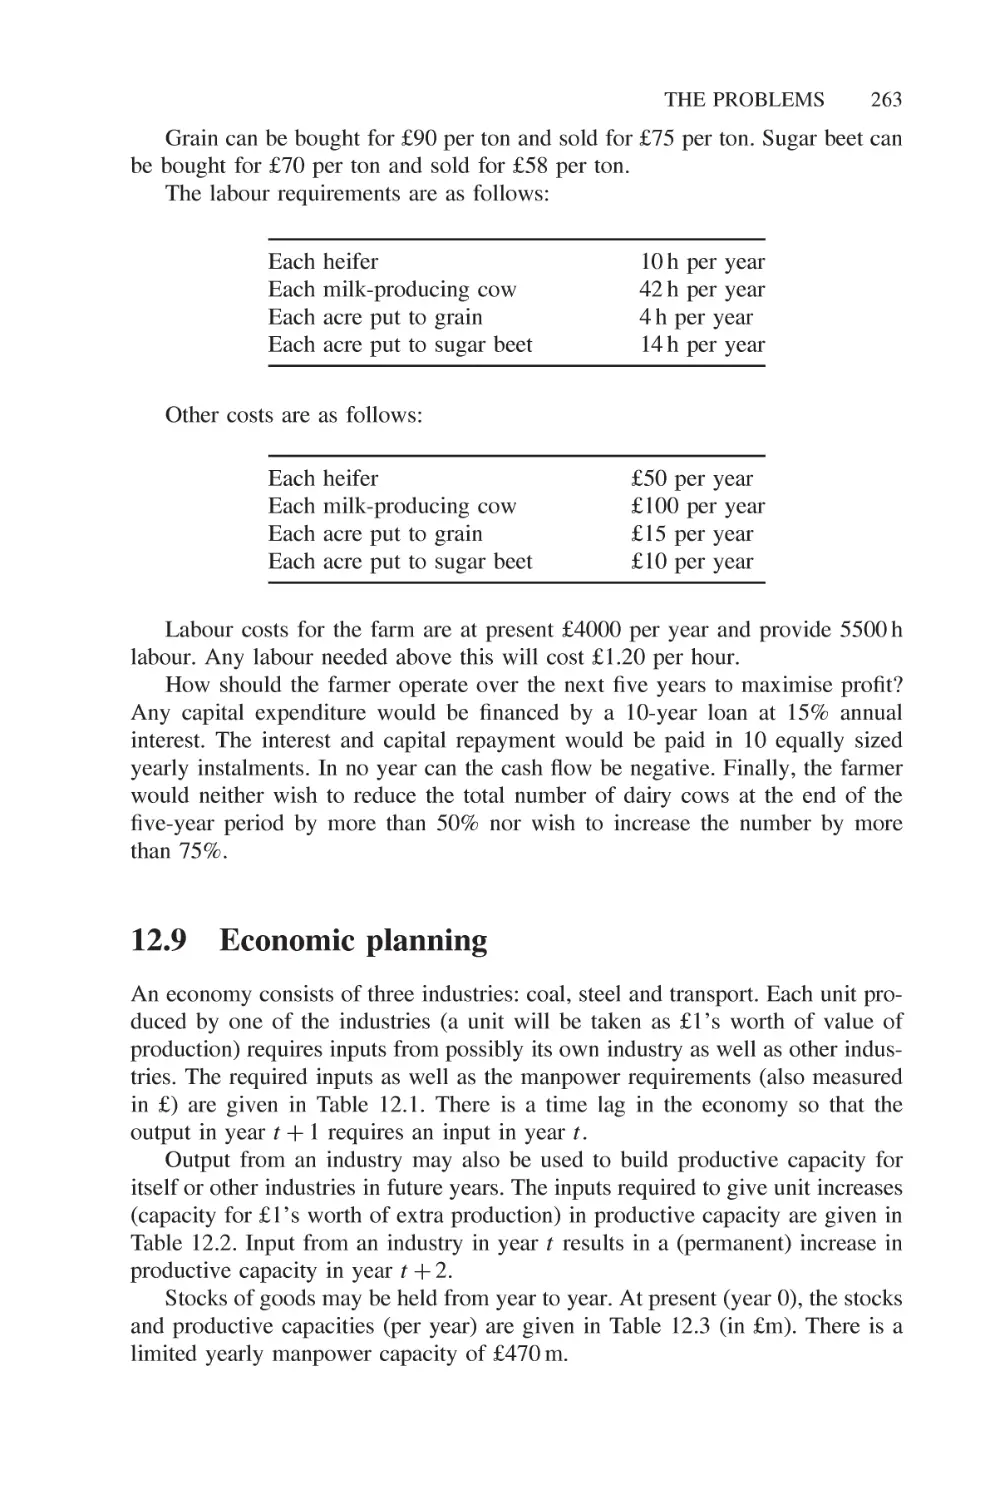 12.9 Economic planning